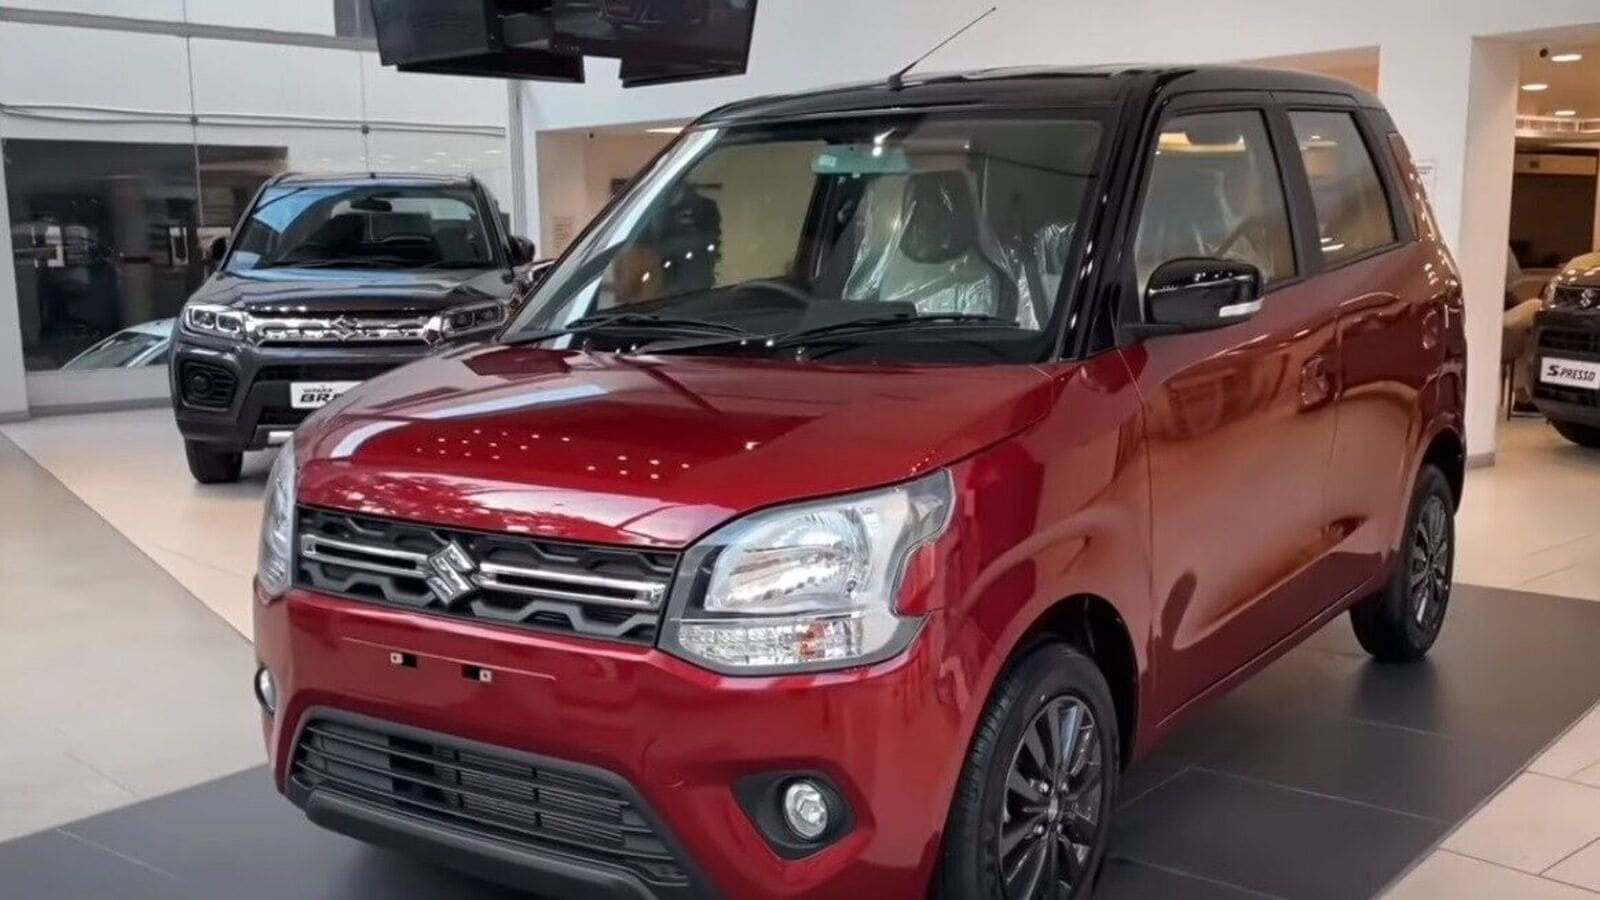 Maruti Suzuki Wagon R facelift arrives in dealerships | Car News